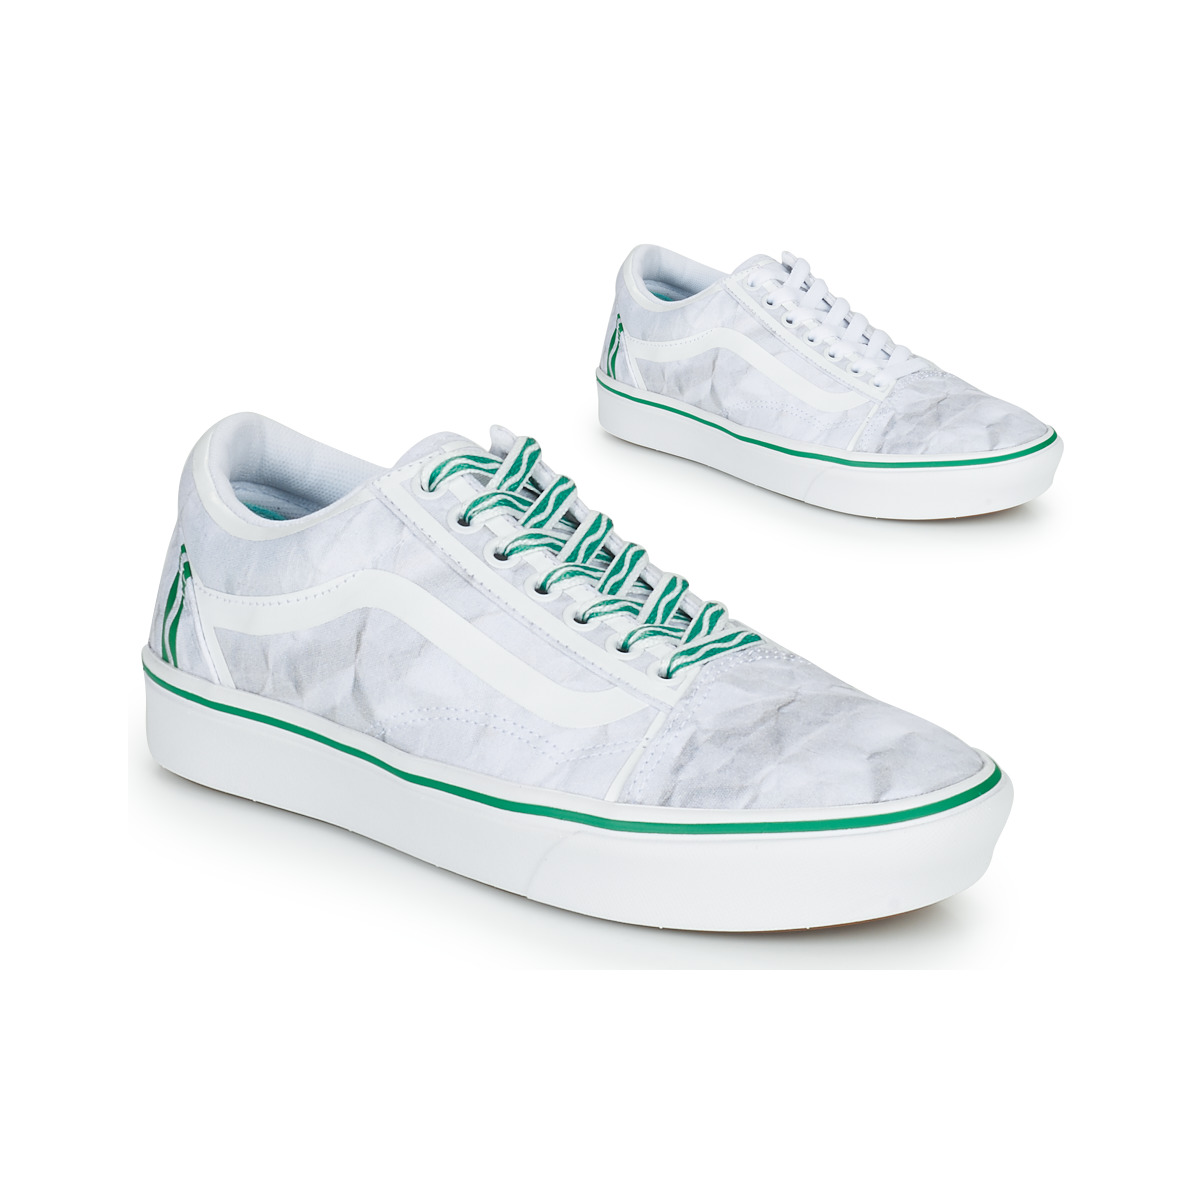 Sapatos Sapatilhas Vans COMFYCUSH OLD SKOOL Branco / Cinza / Verde